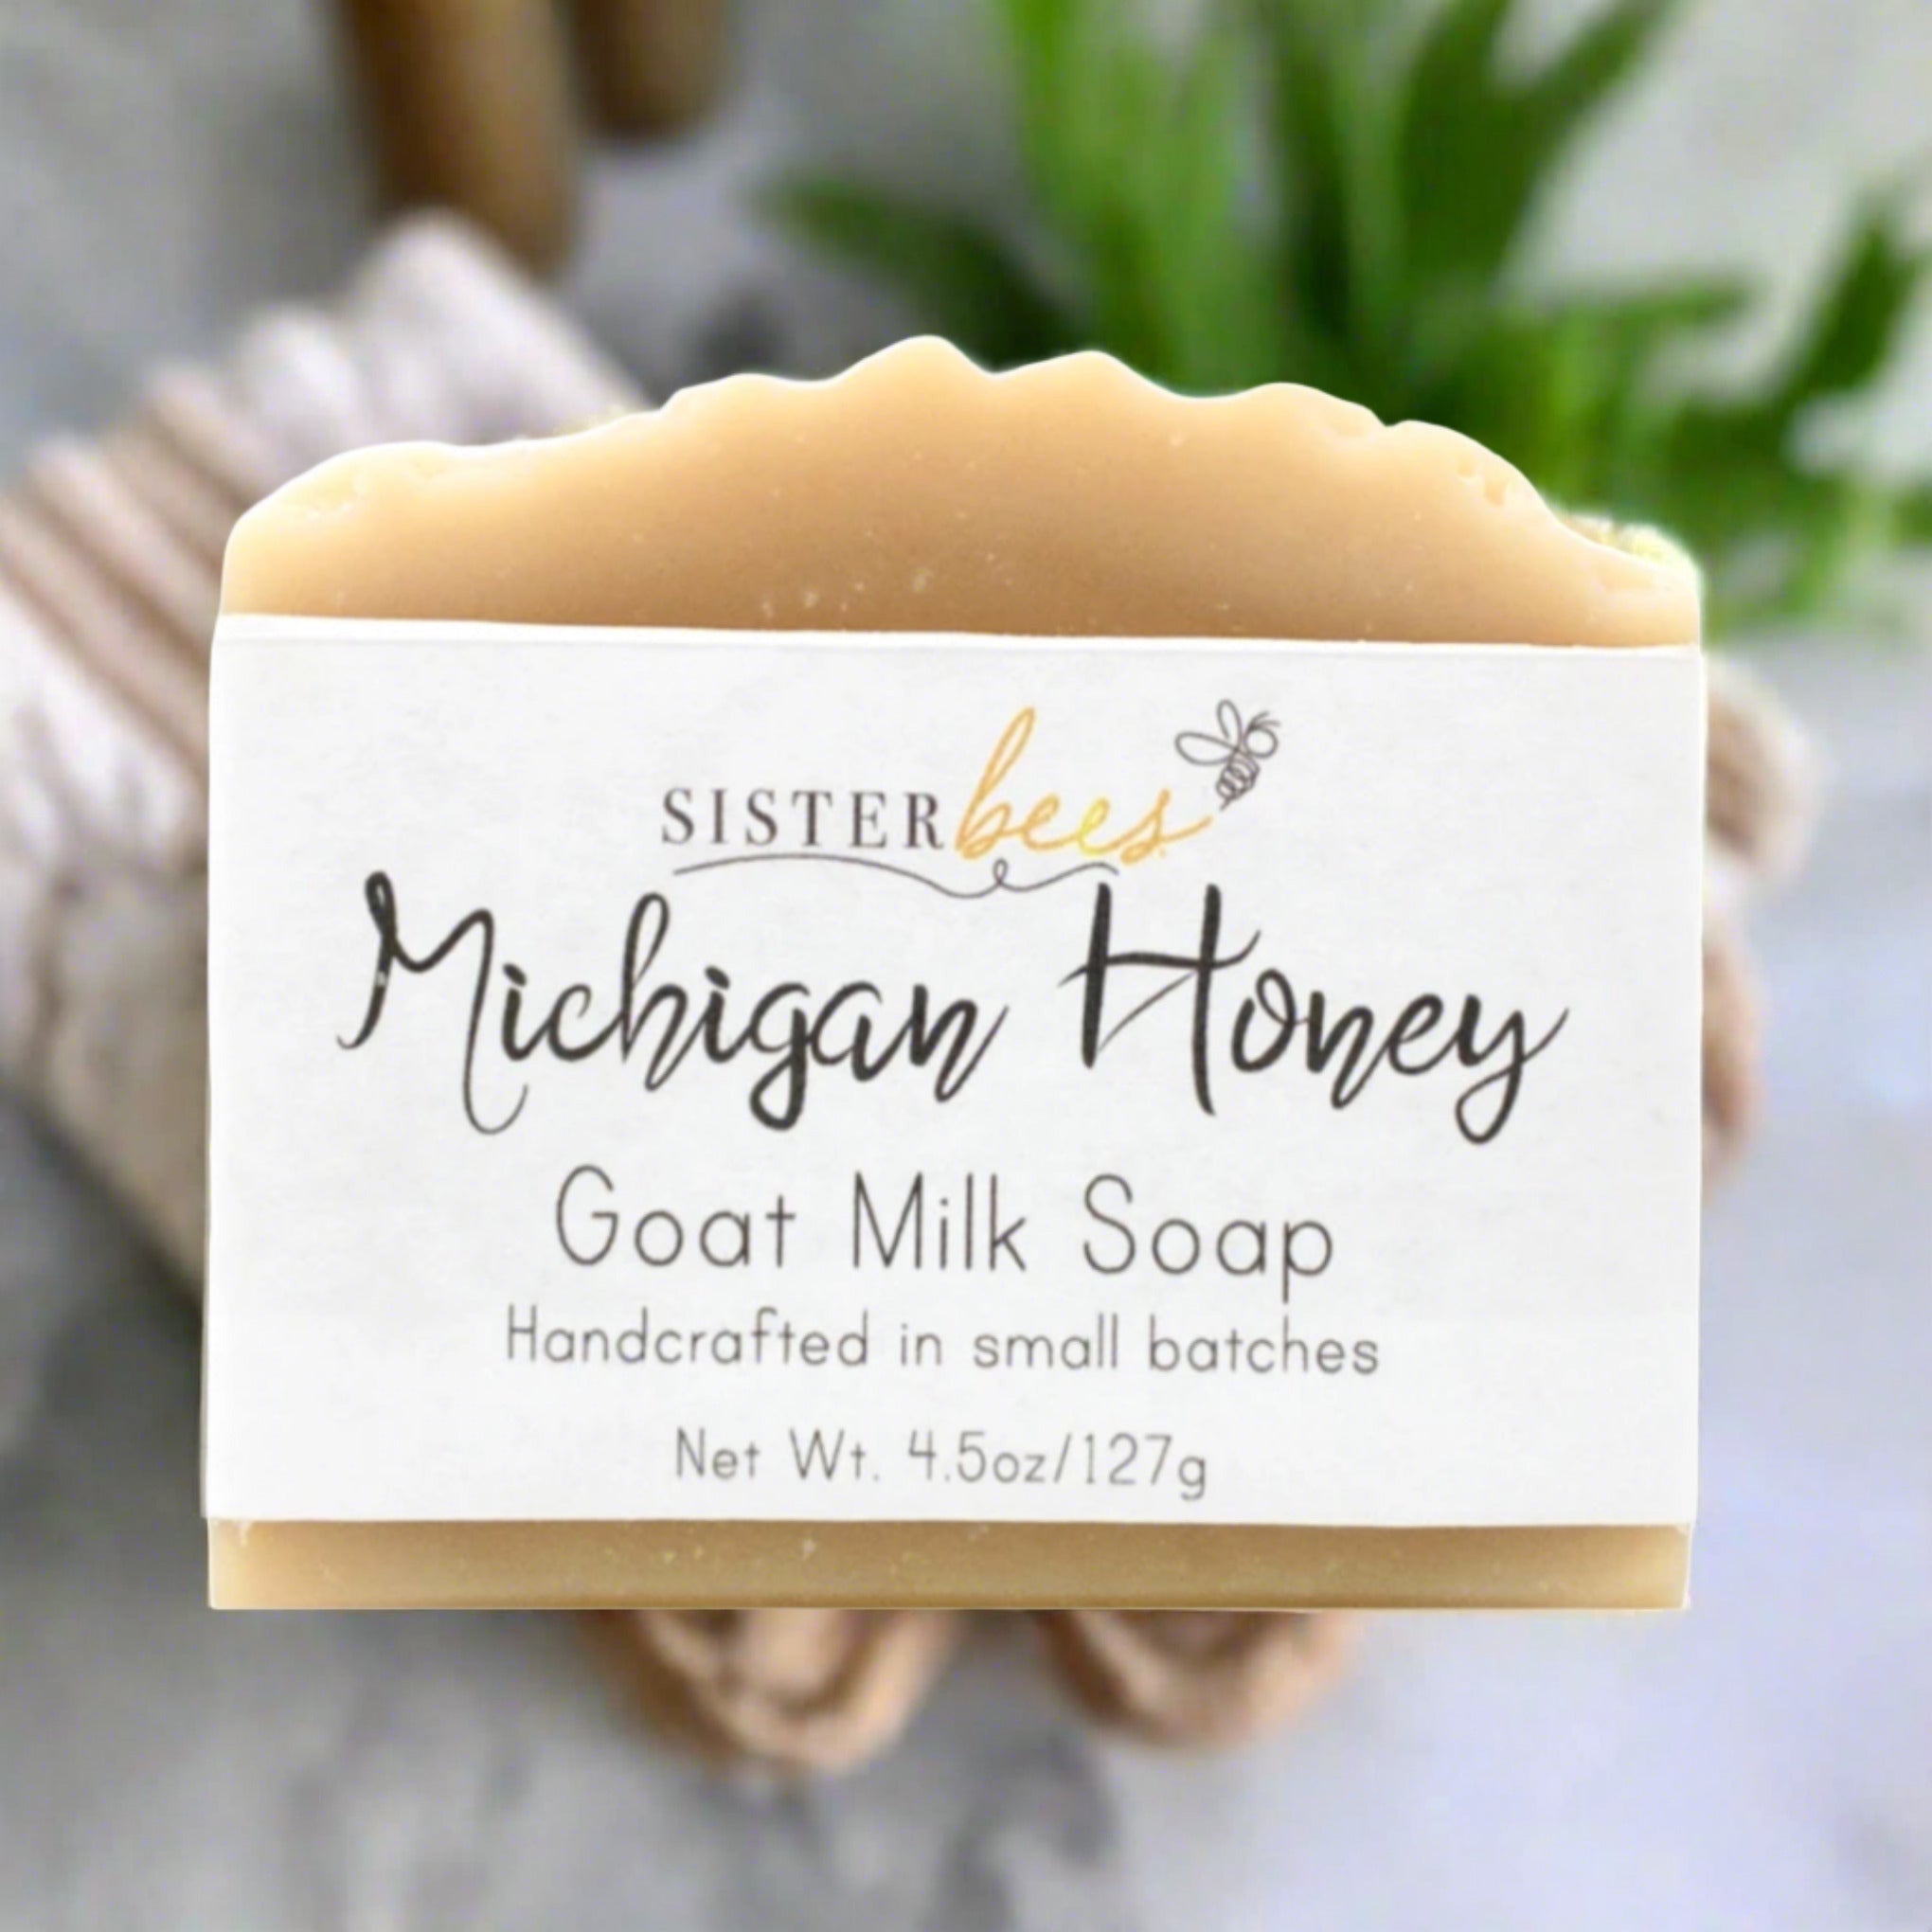 michigan honey goat milk soap, made in michigan, handcrafted soap